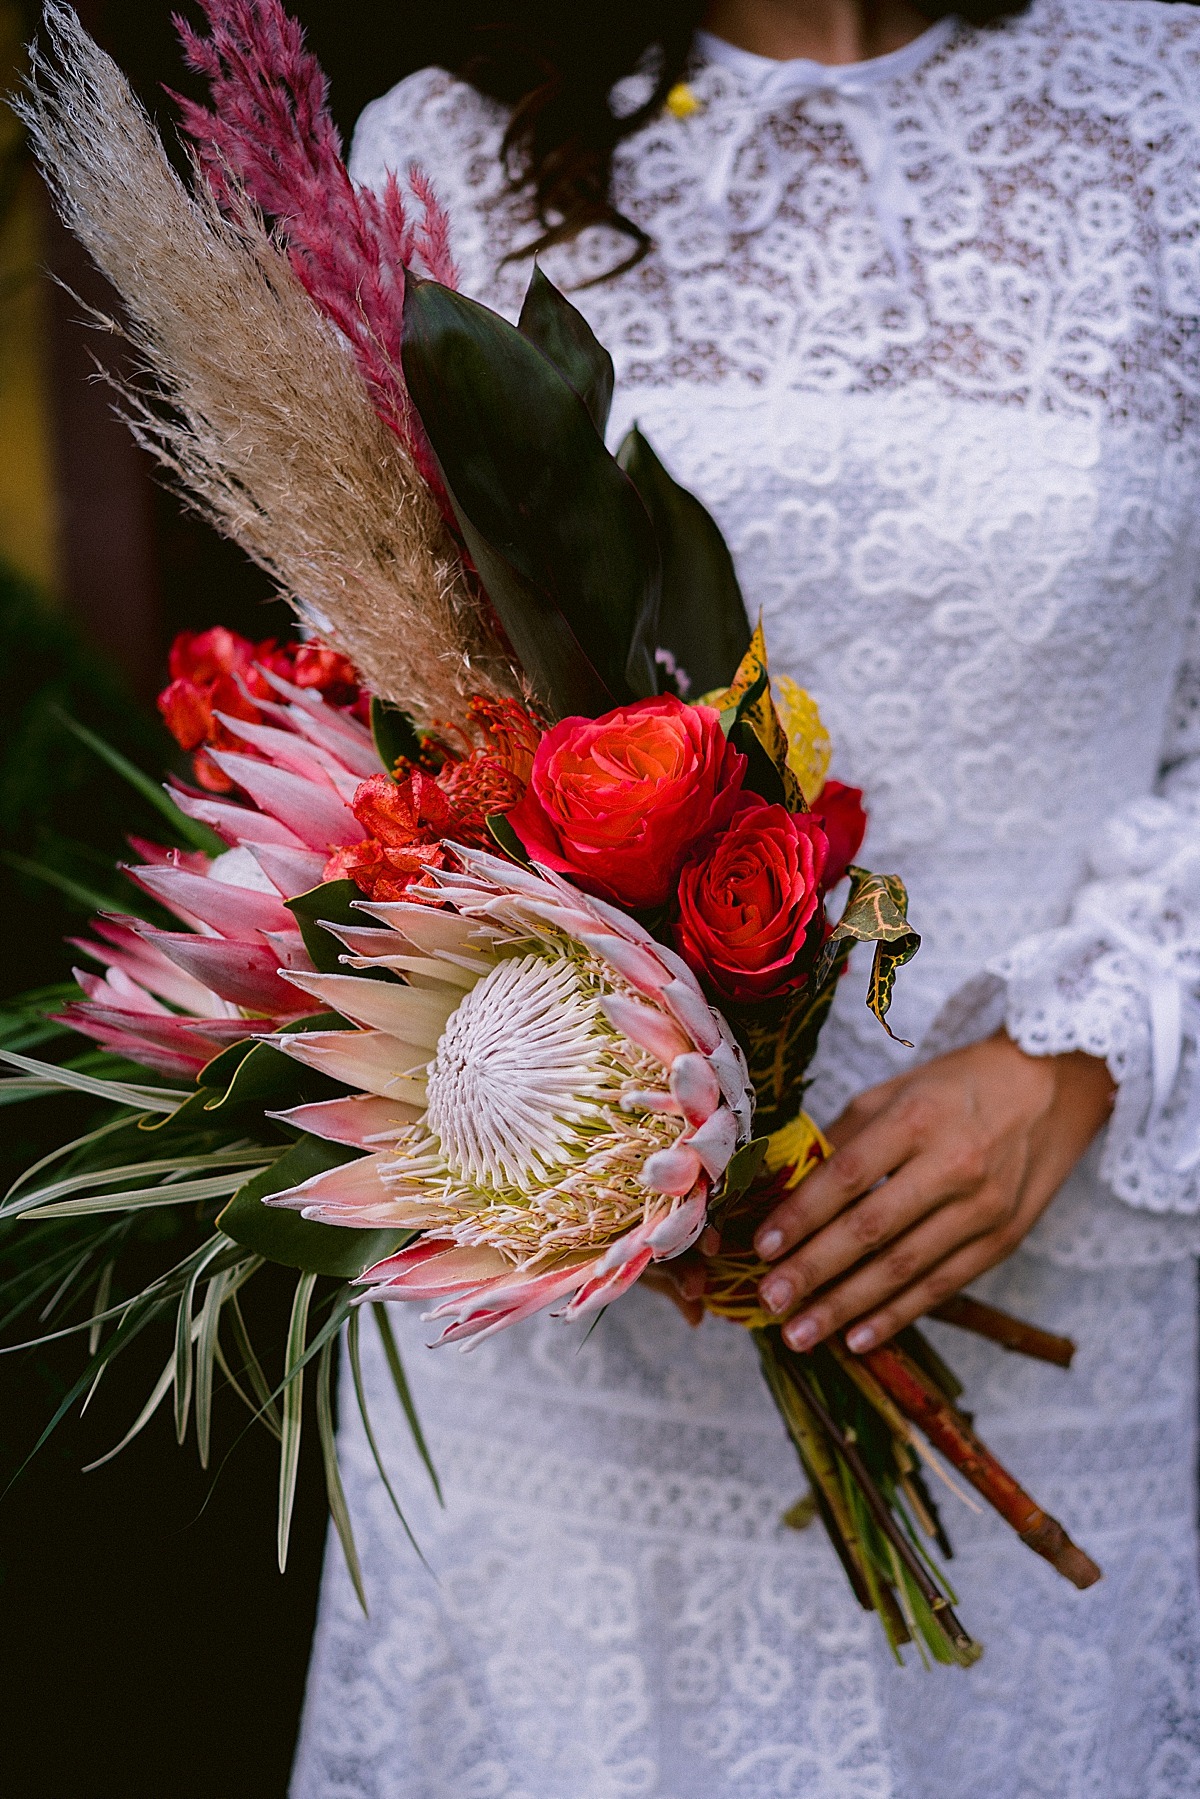 Frida Kahlo Inspired Wedding Inspiration at Garda lake